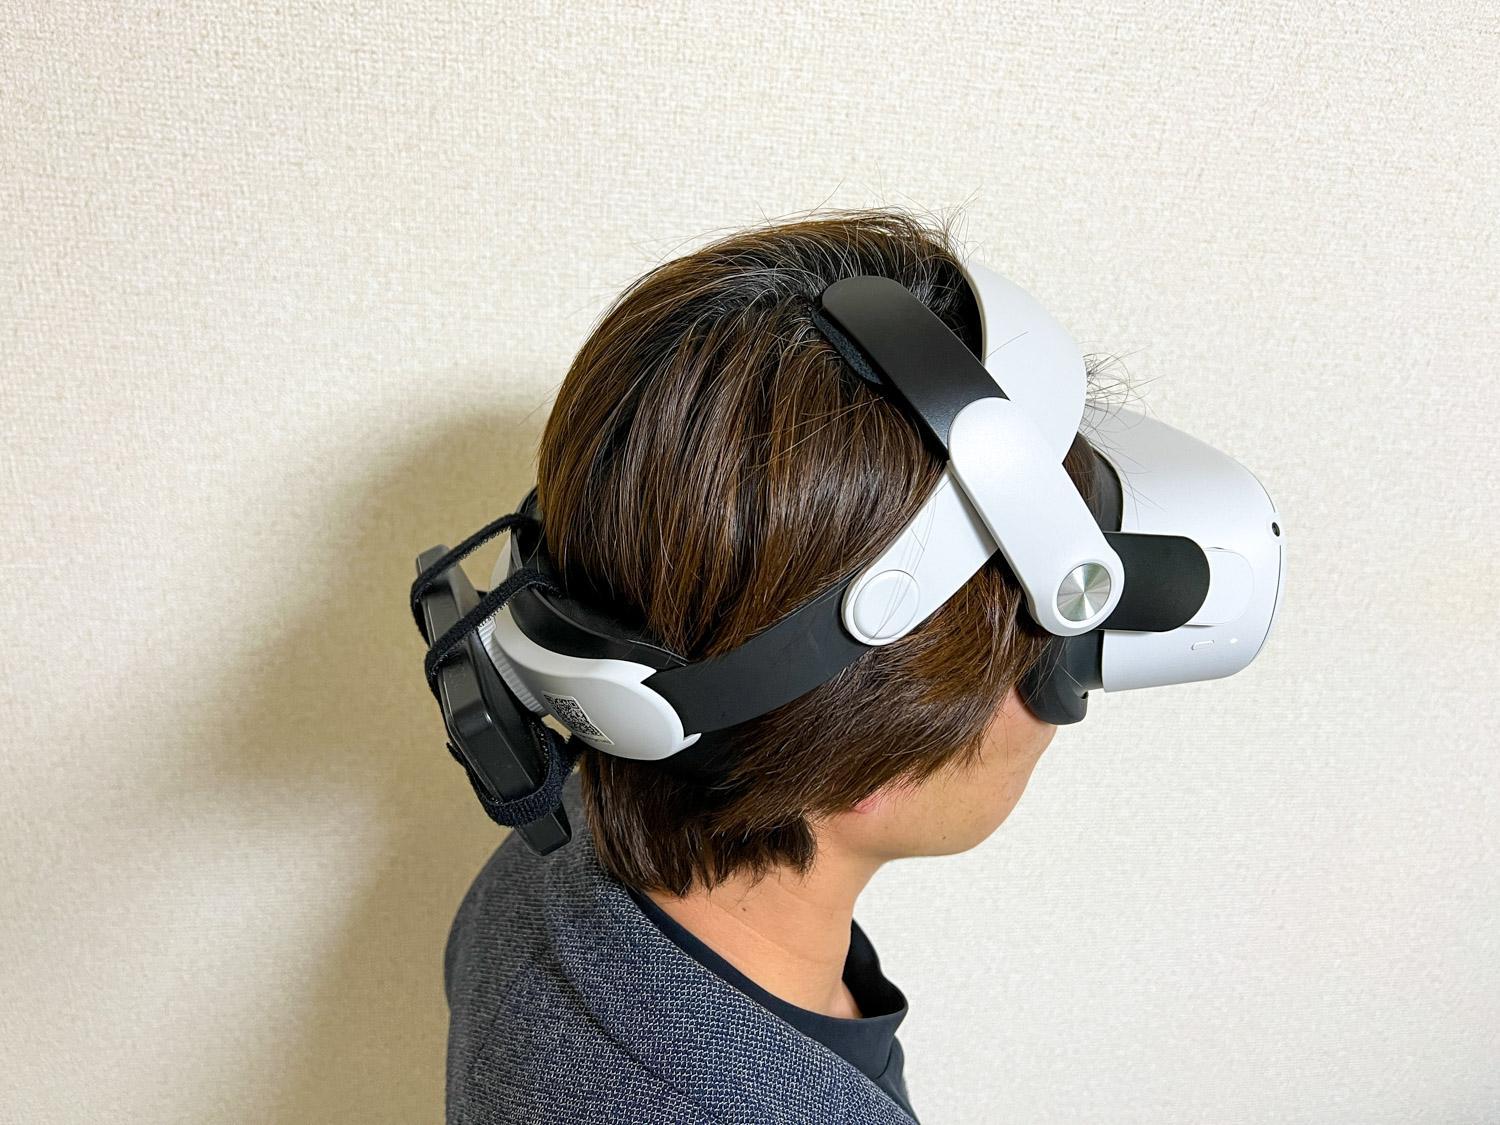 VRヘッドストラップで快適な装着感を実現